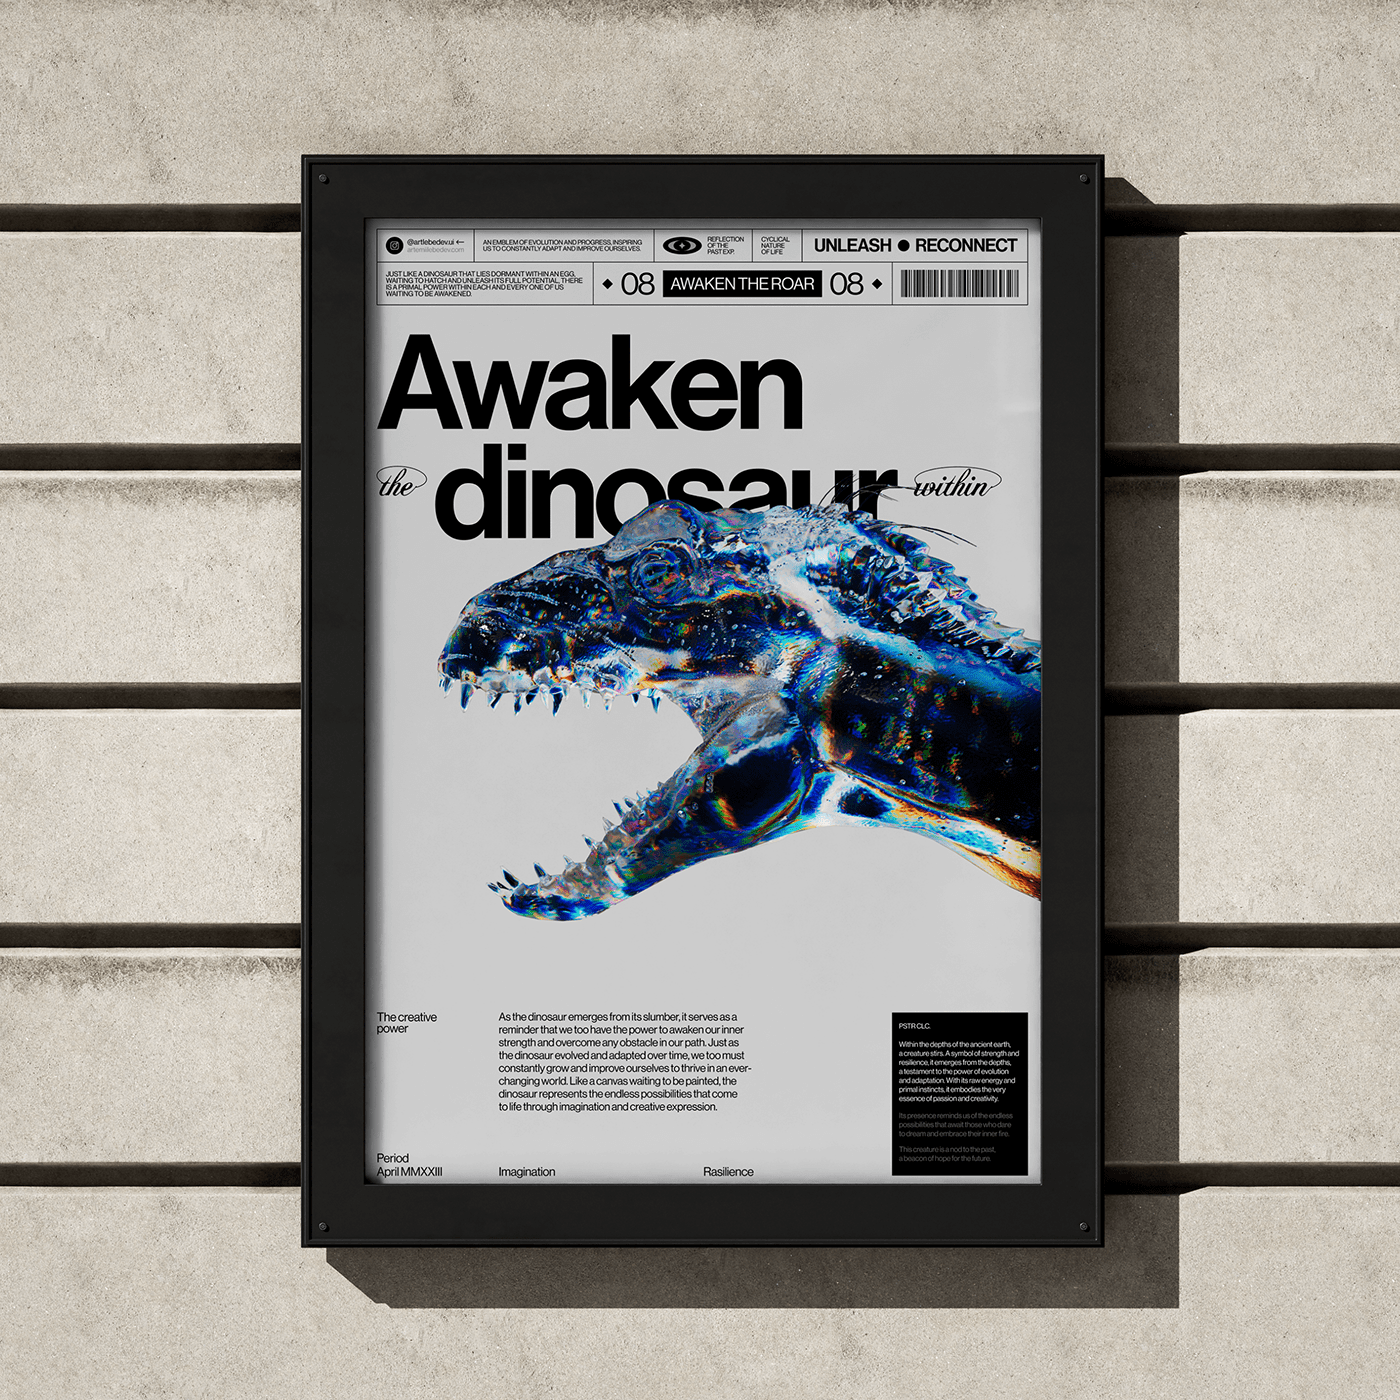 Dispertion Dreams. Q1 2023. Awaken the Dinosaur within poster.